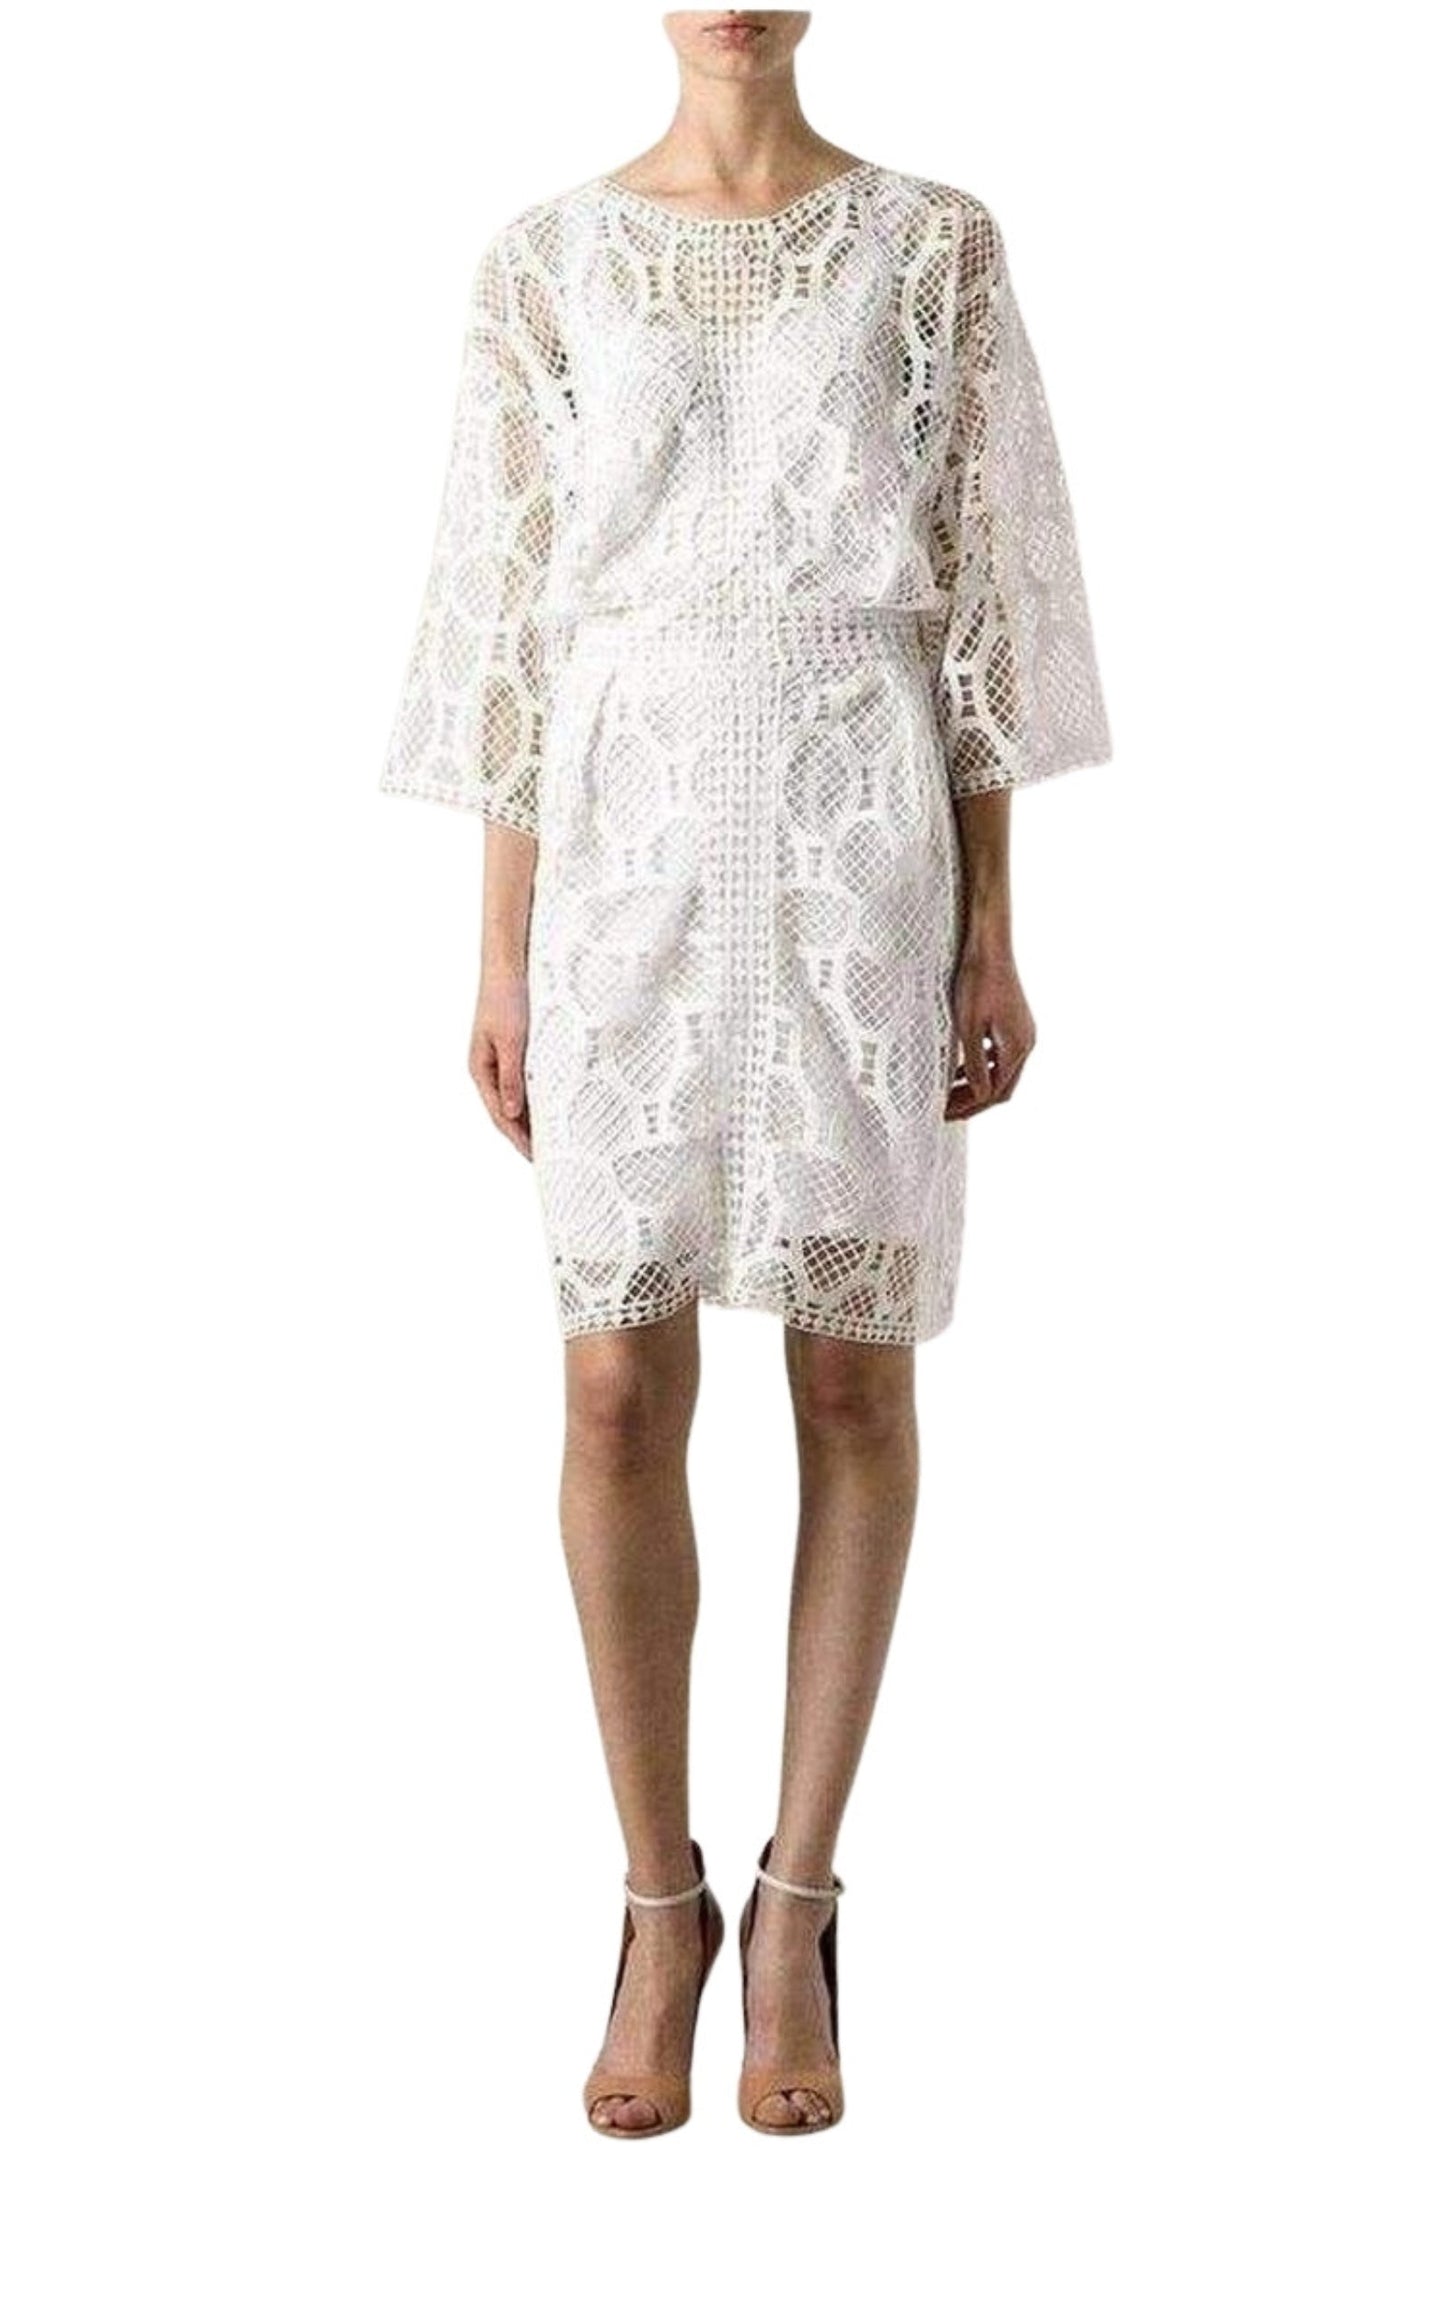  ChloeCrochet Lace Cotton Dress - Runway Catalog